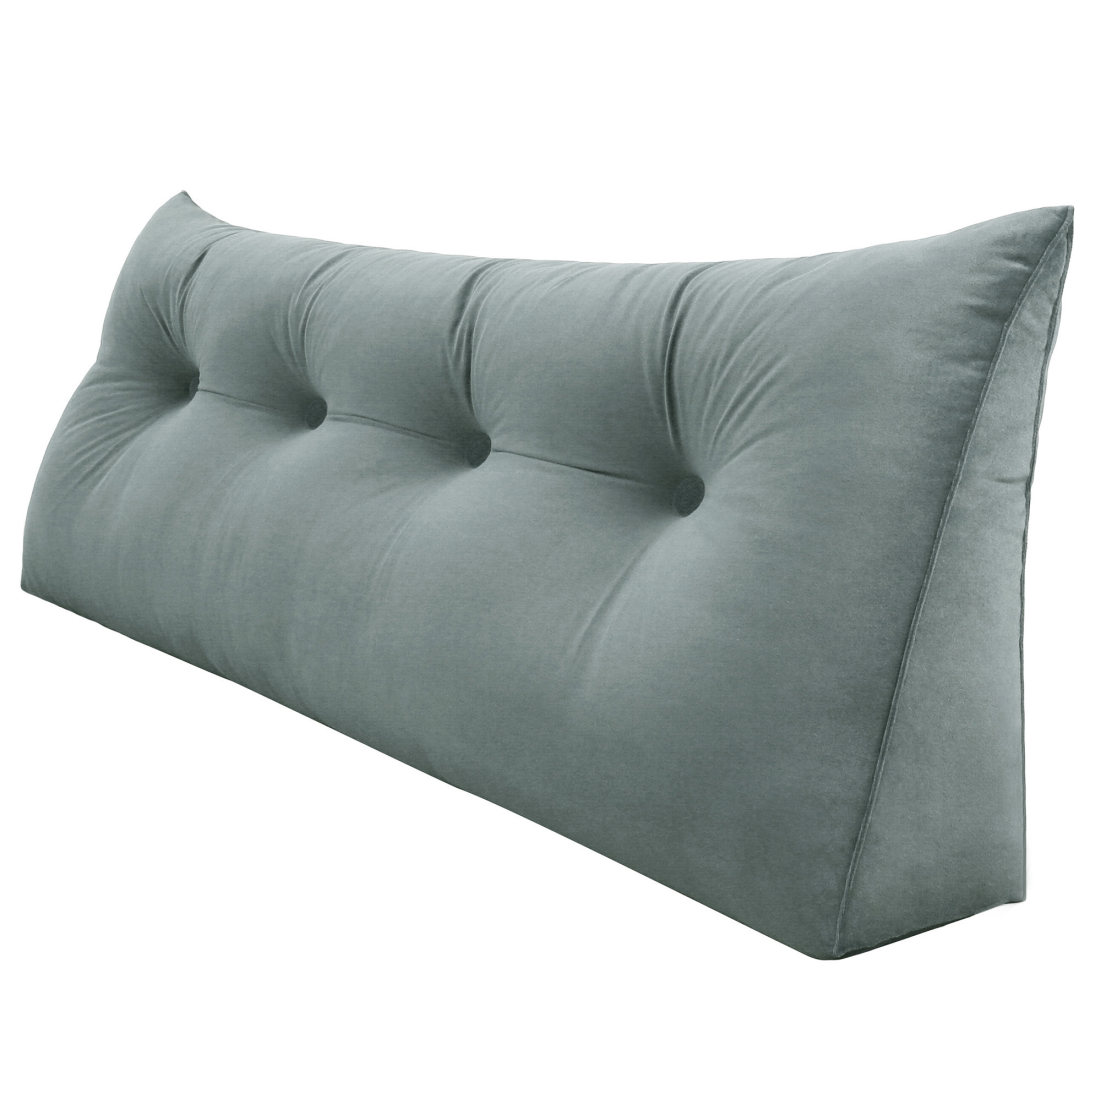 Large Bolster Upholstered Triangular Sofa Wedge Pillow Bed